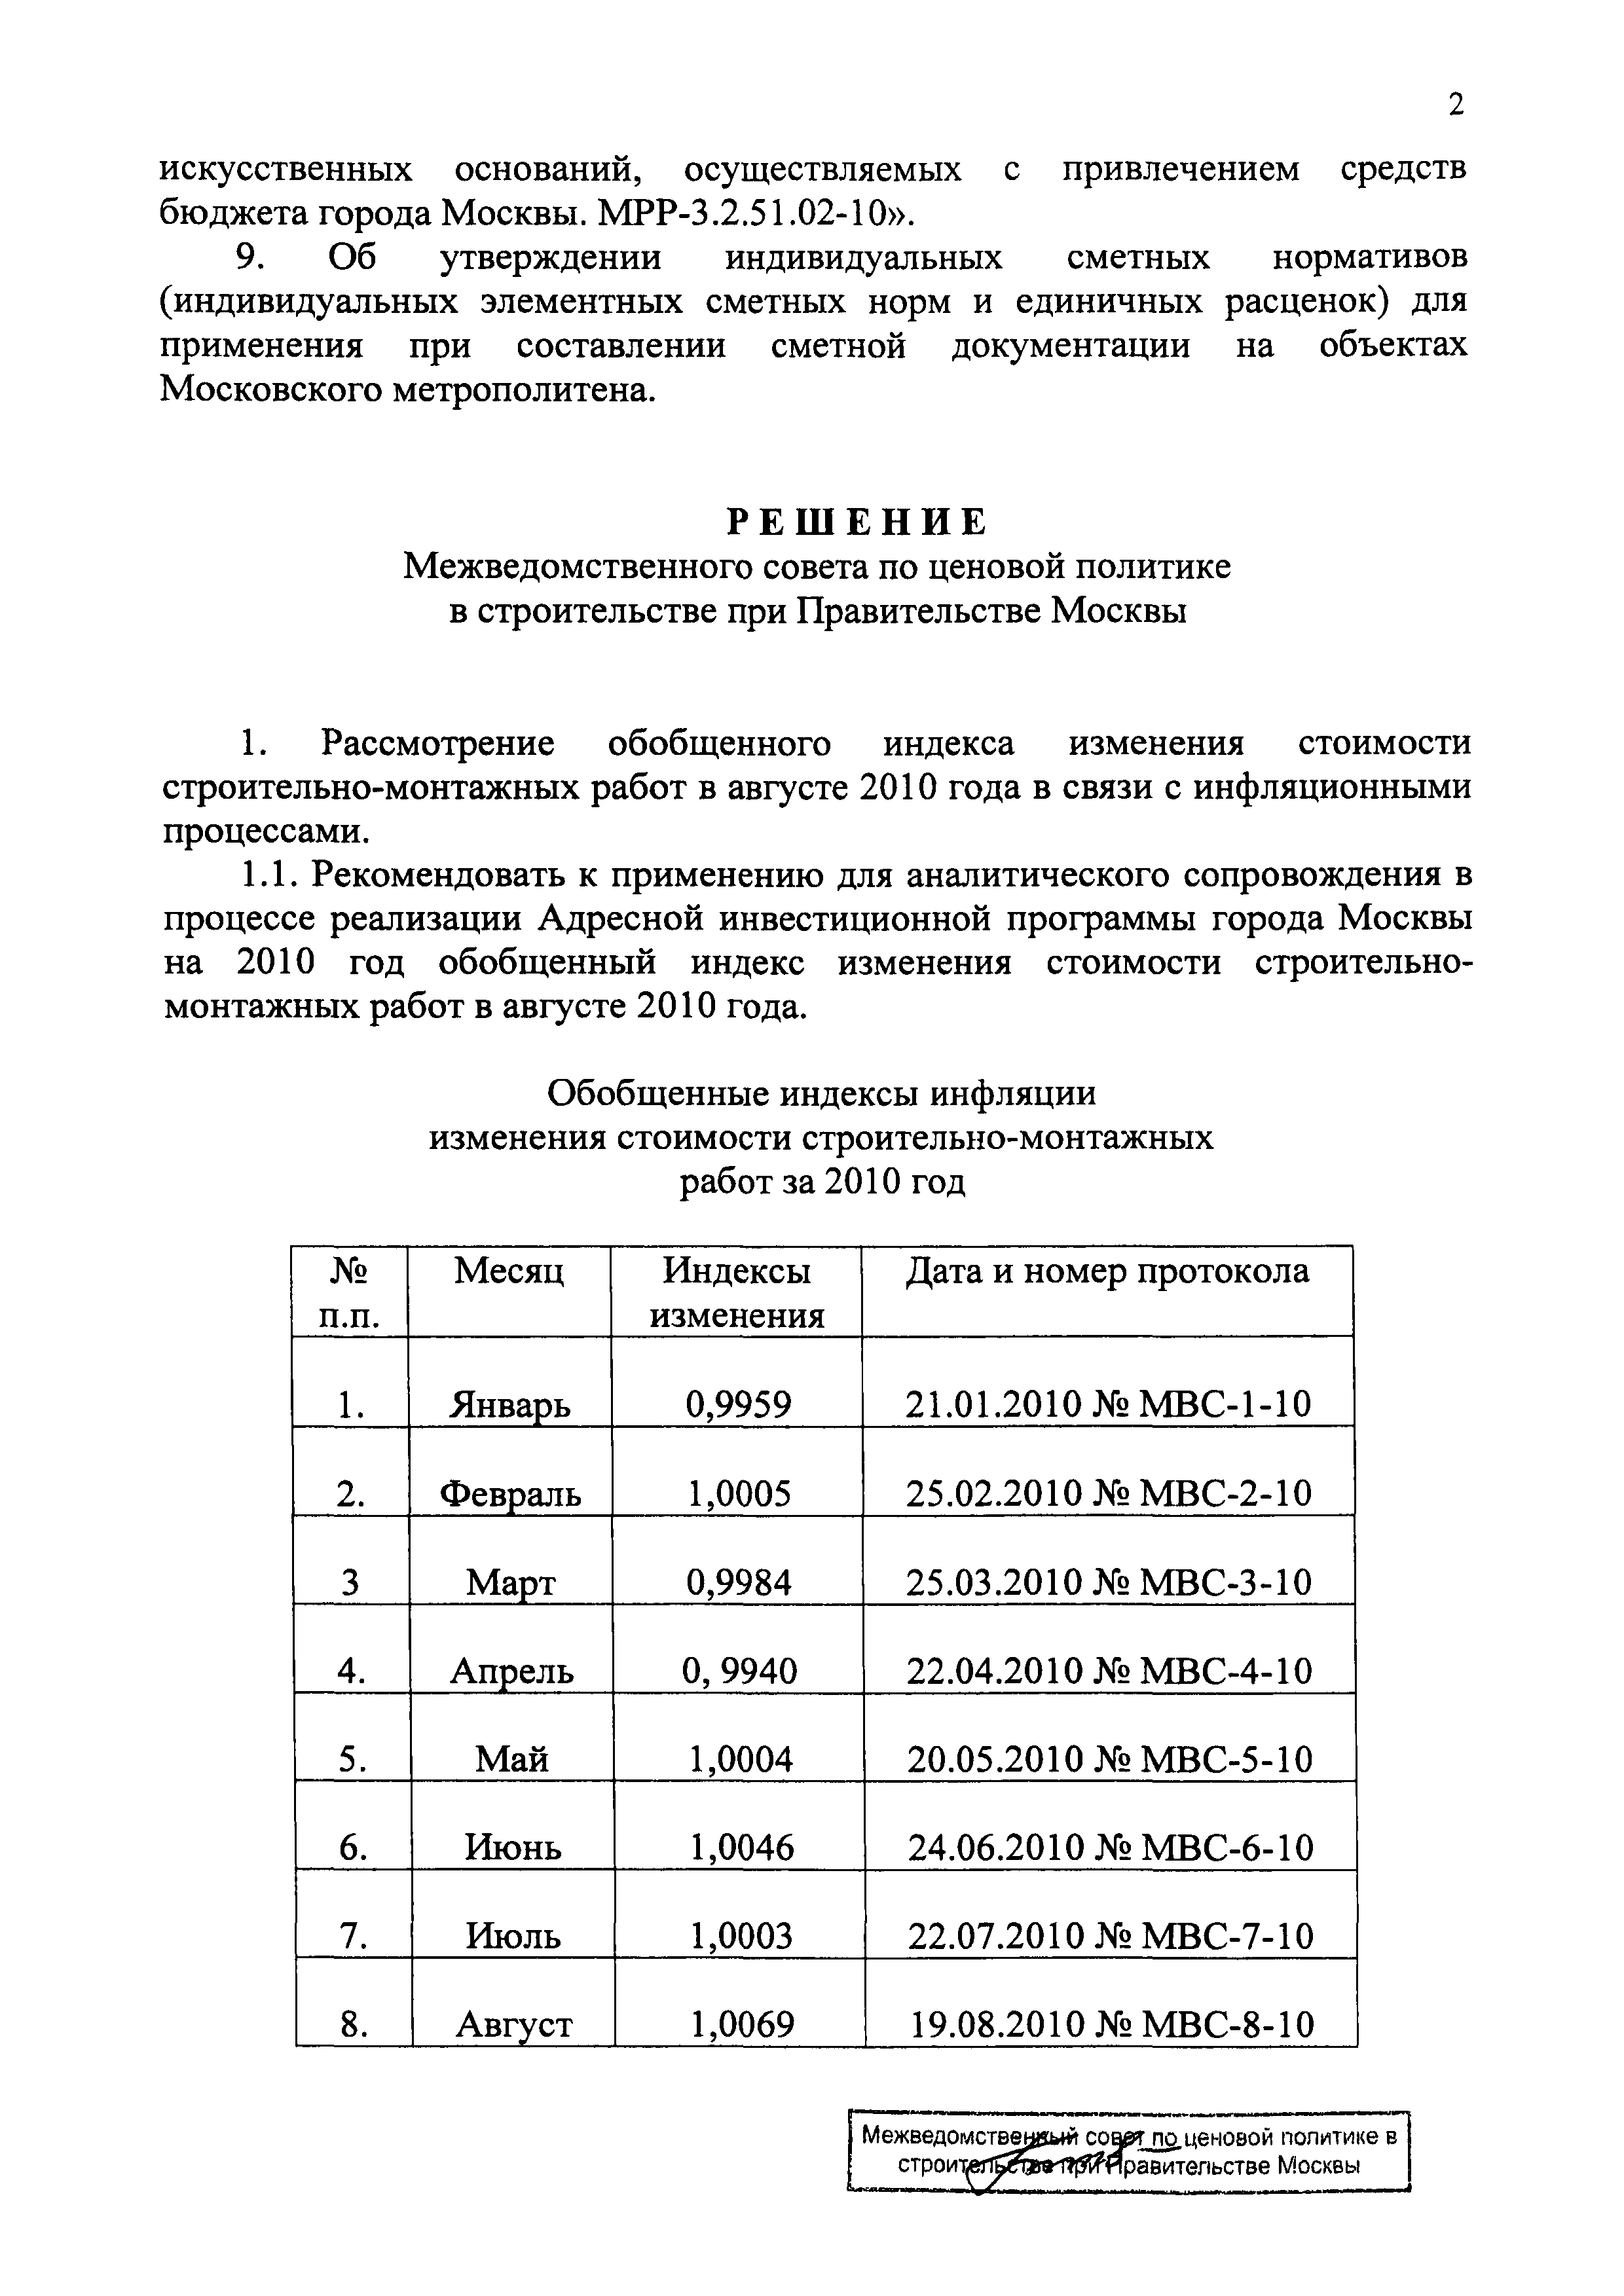 Протокол МВС-8-10